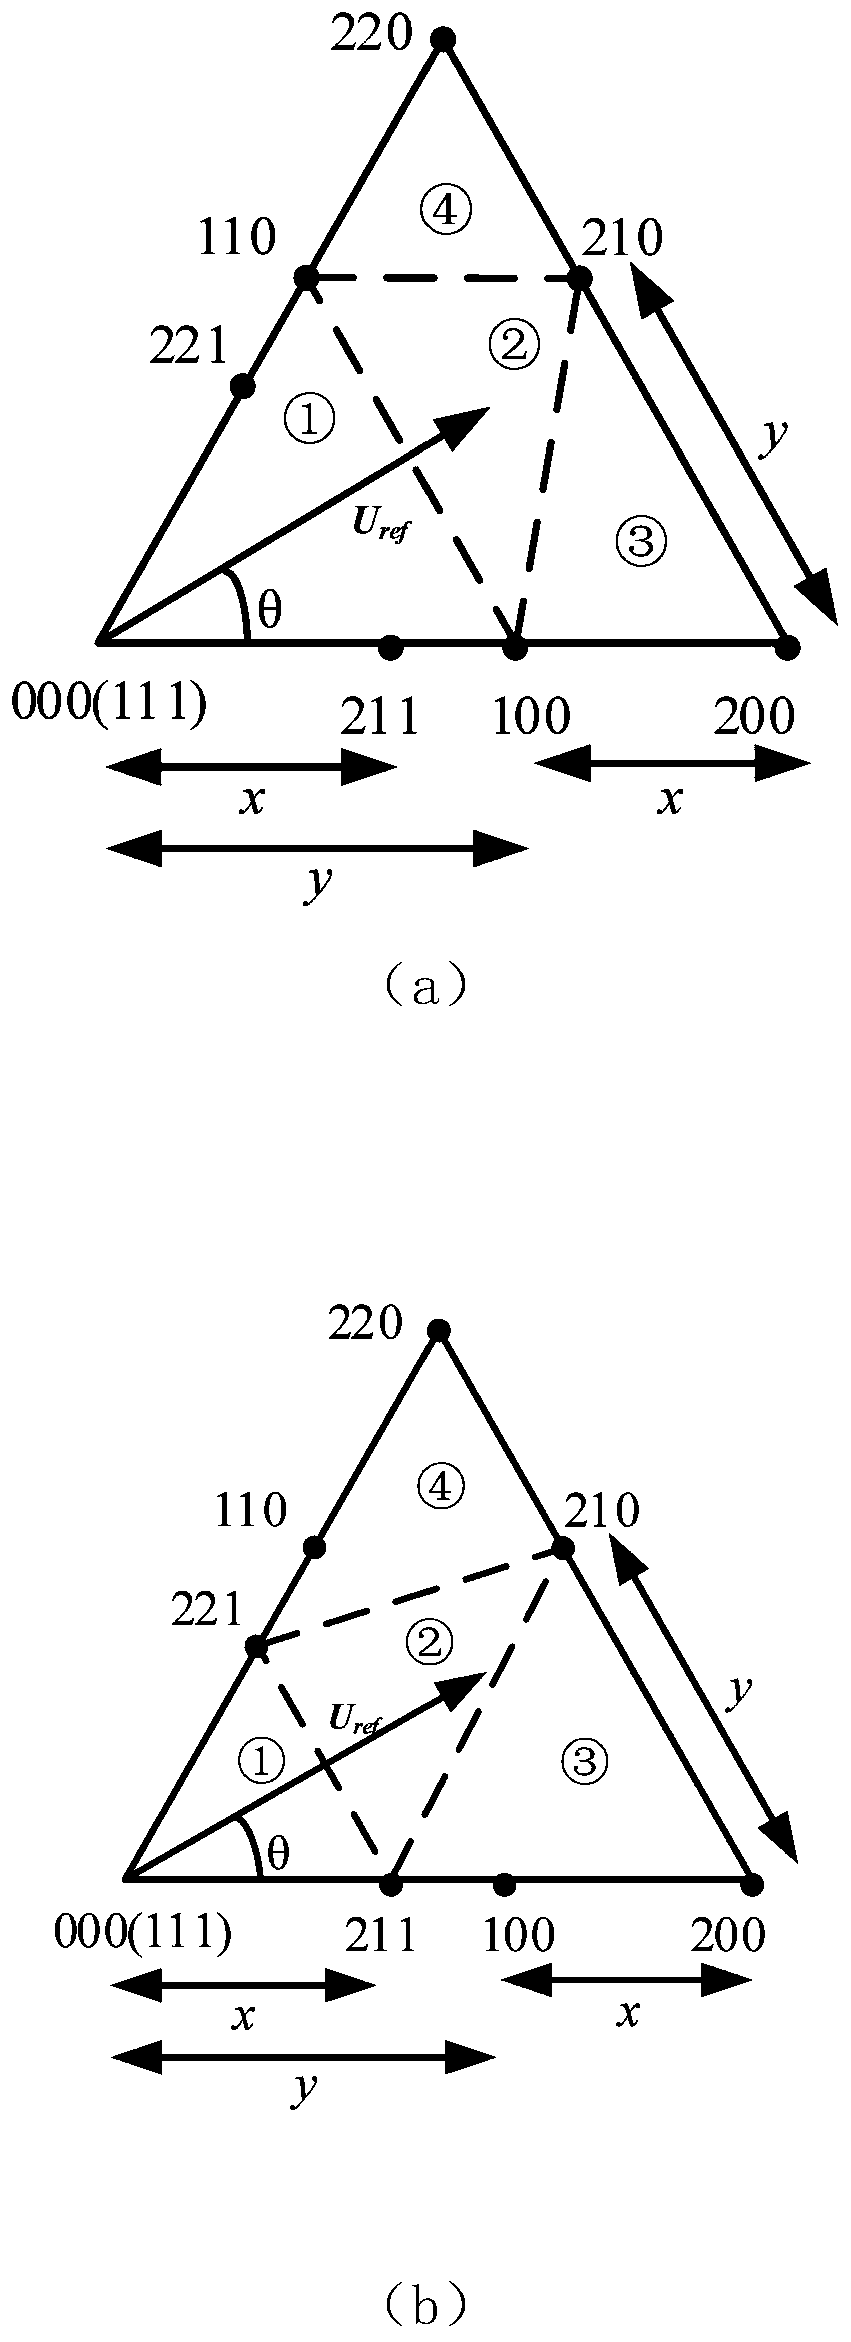 Space vector modulation method of multi-source converter